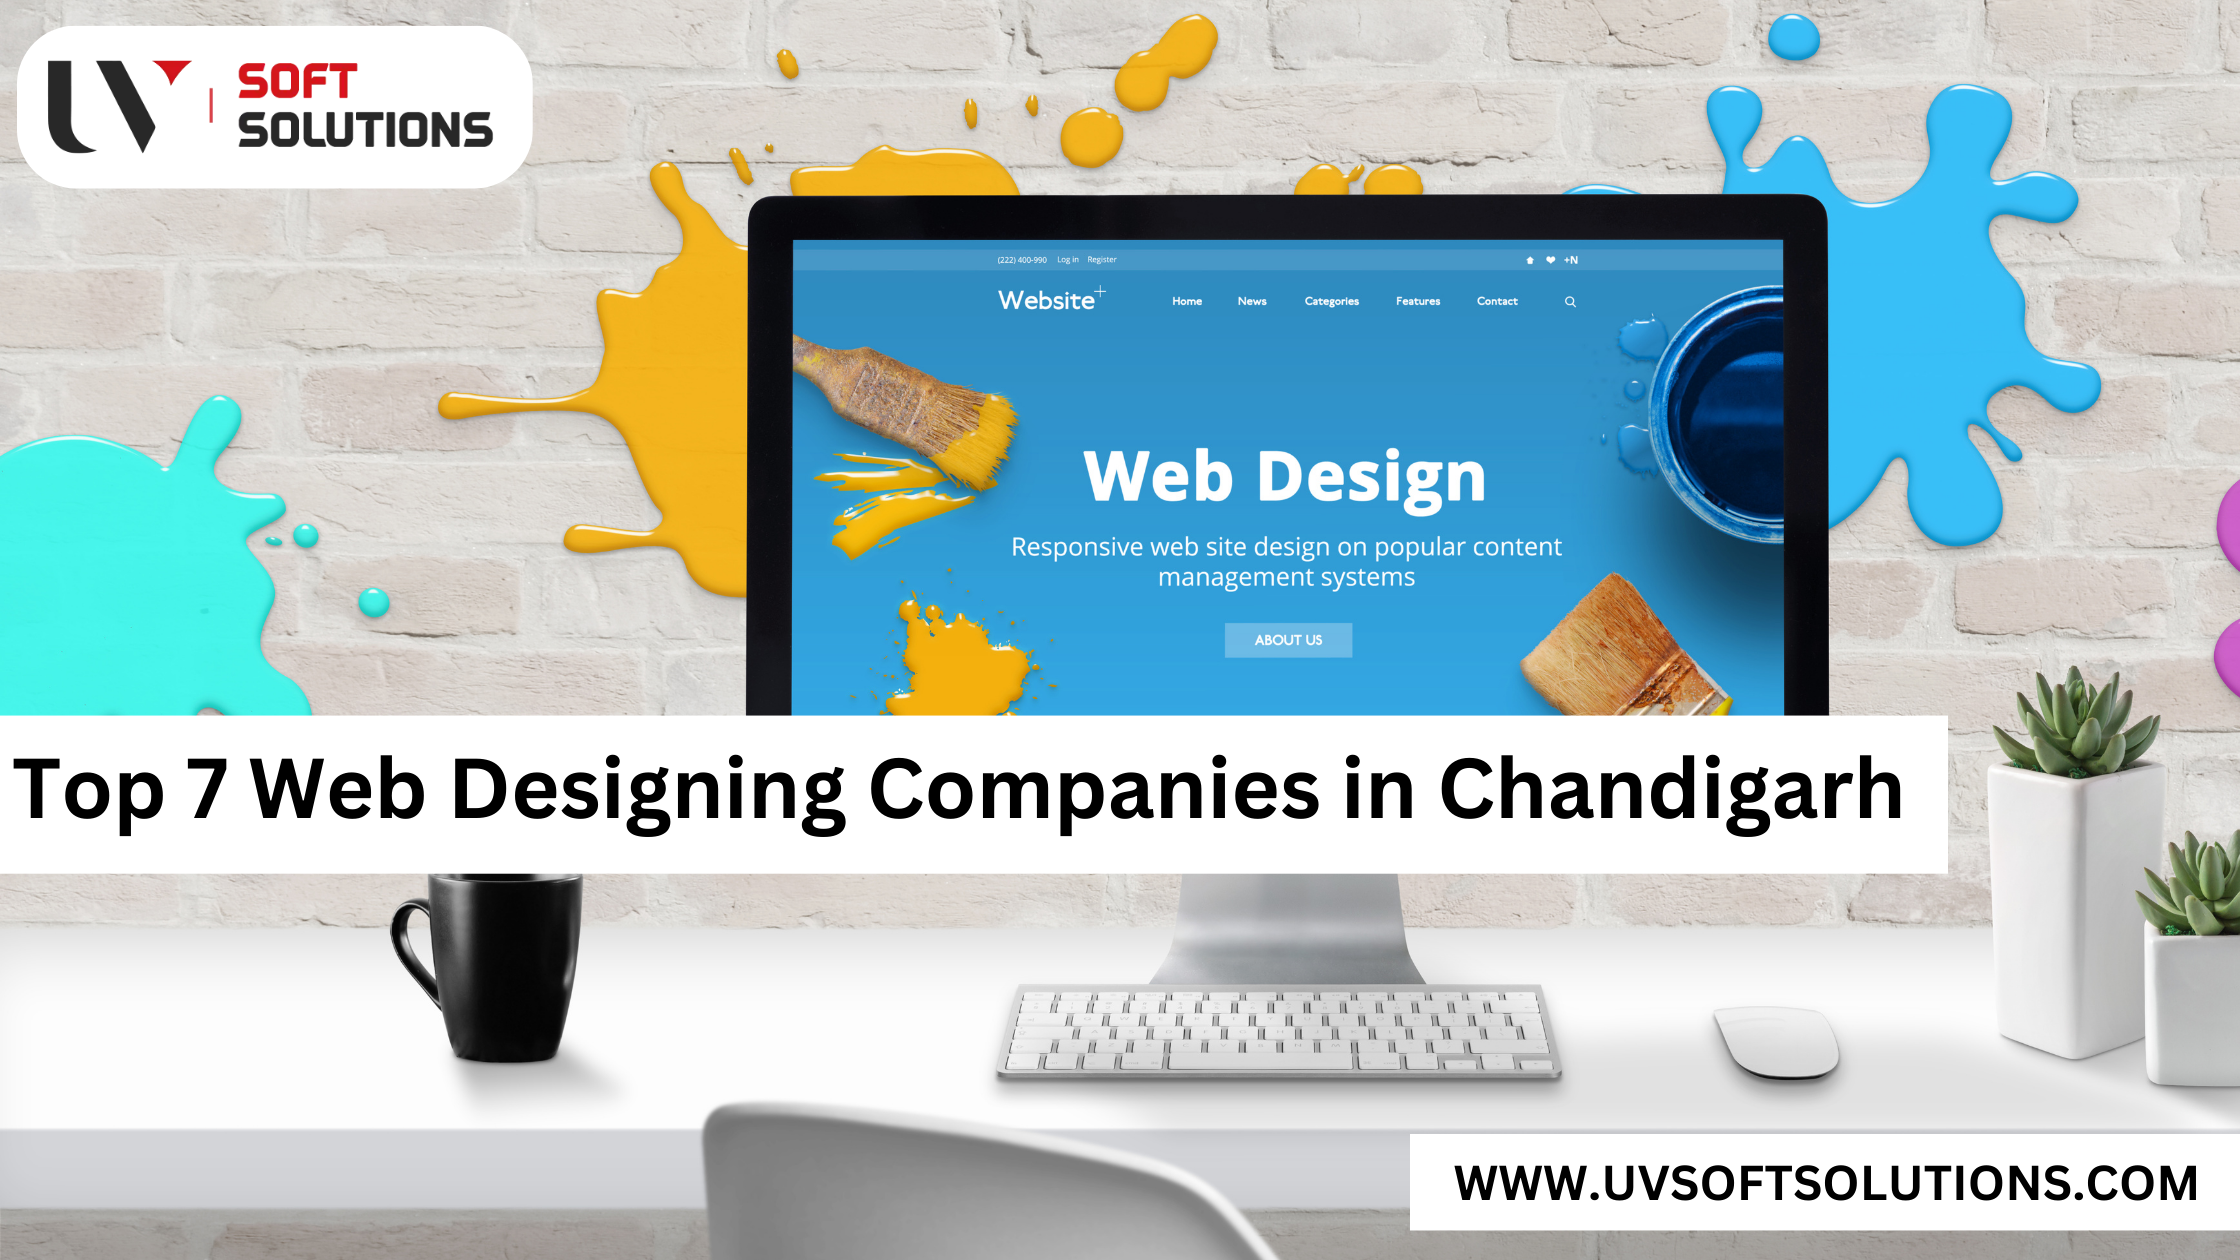 Top 7 Web Designing Companies in Chandigarh